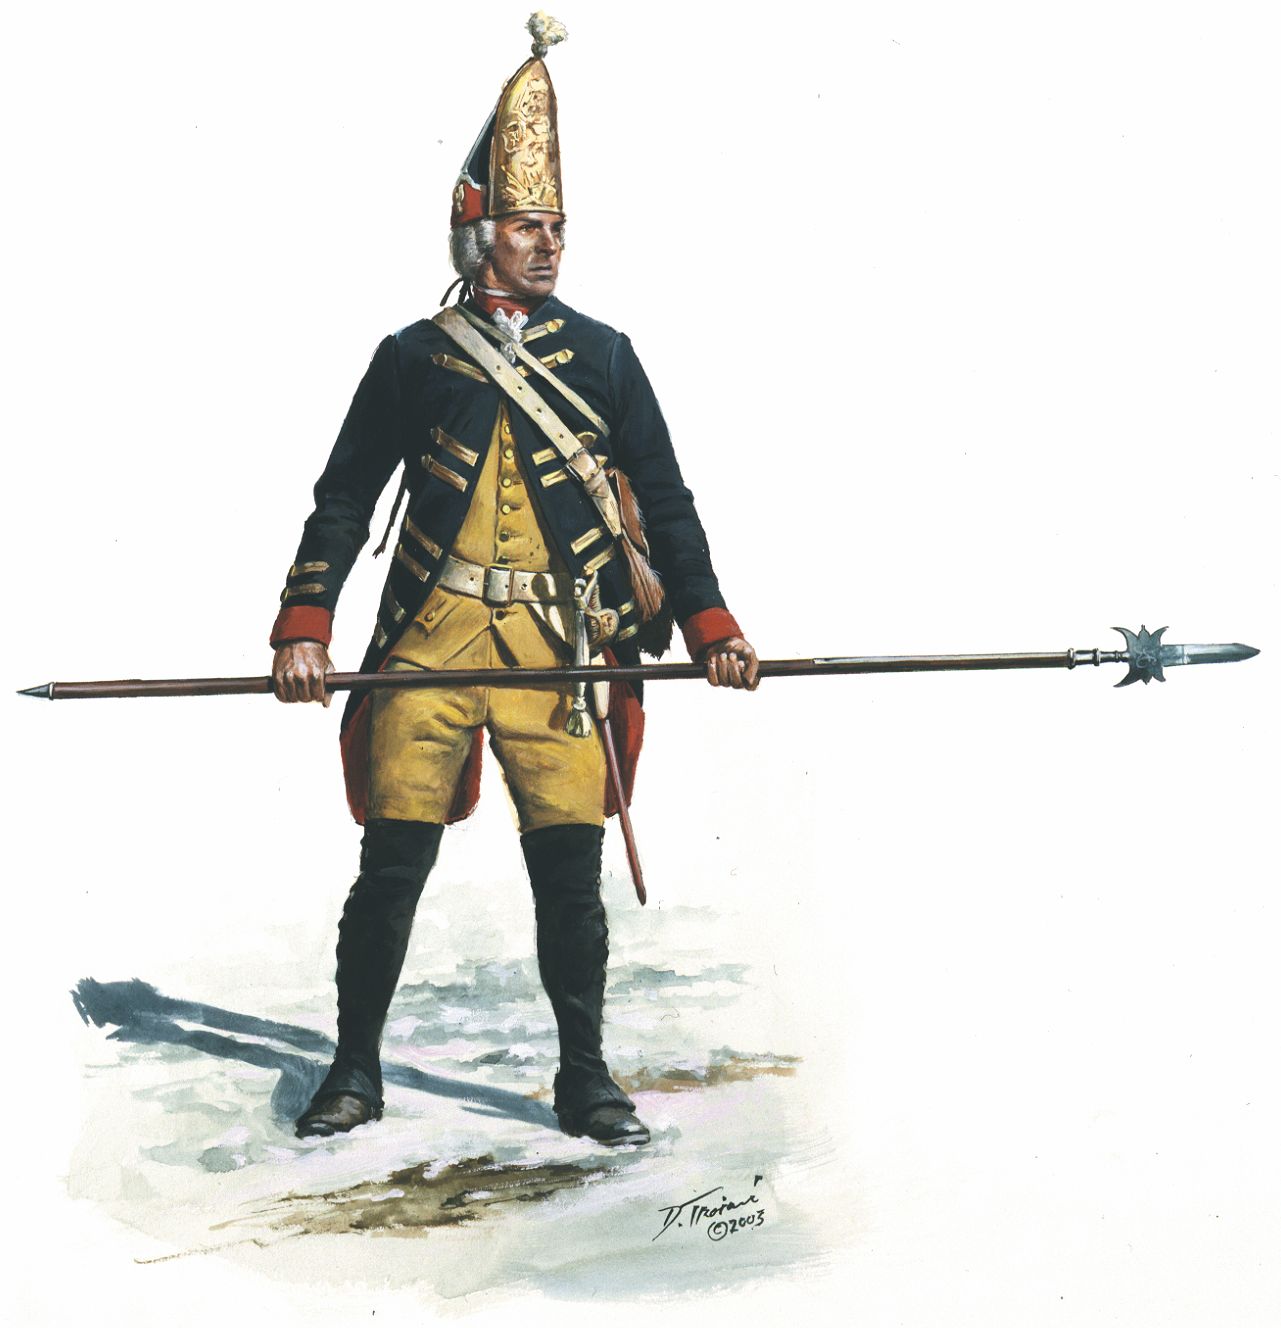 Hessian sergeant of Rall’s Grenadier Regiment at Trenton in 1776. 